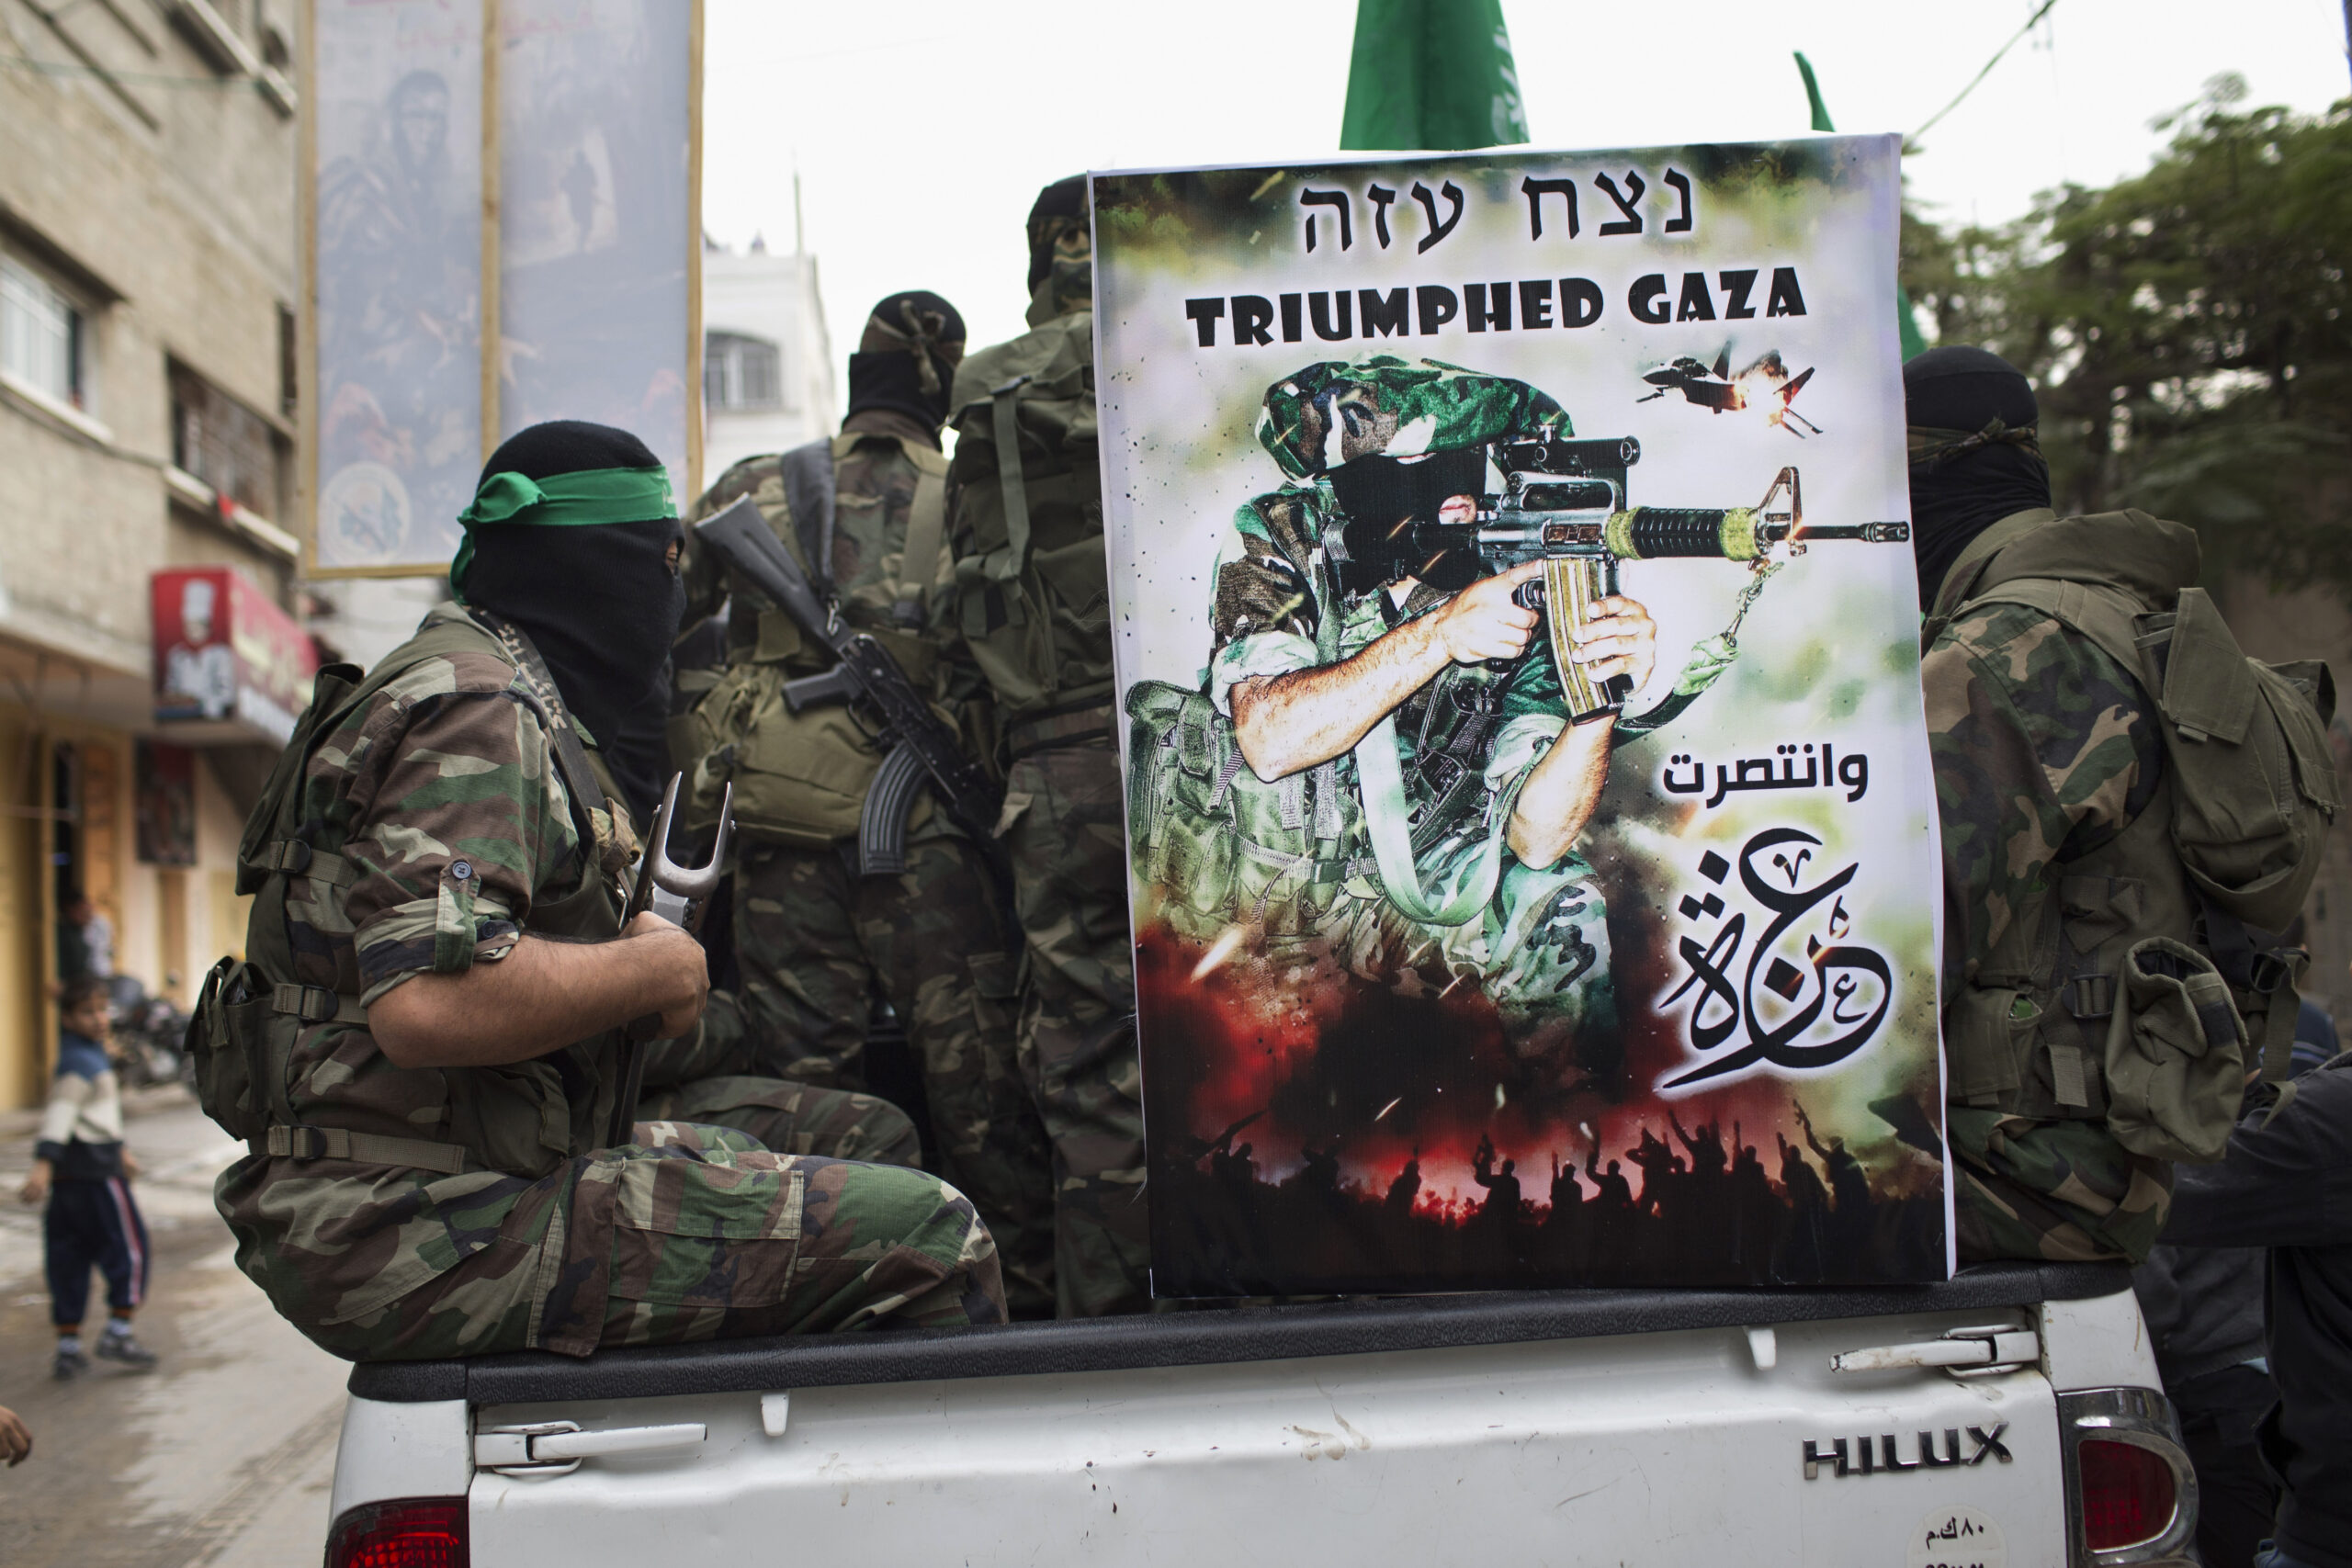 The BBC Apologizes for Amplifying Hamas Claim About Israeli ‘Summary Executions’ in Gaza